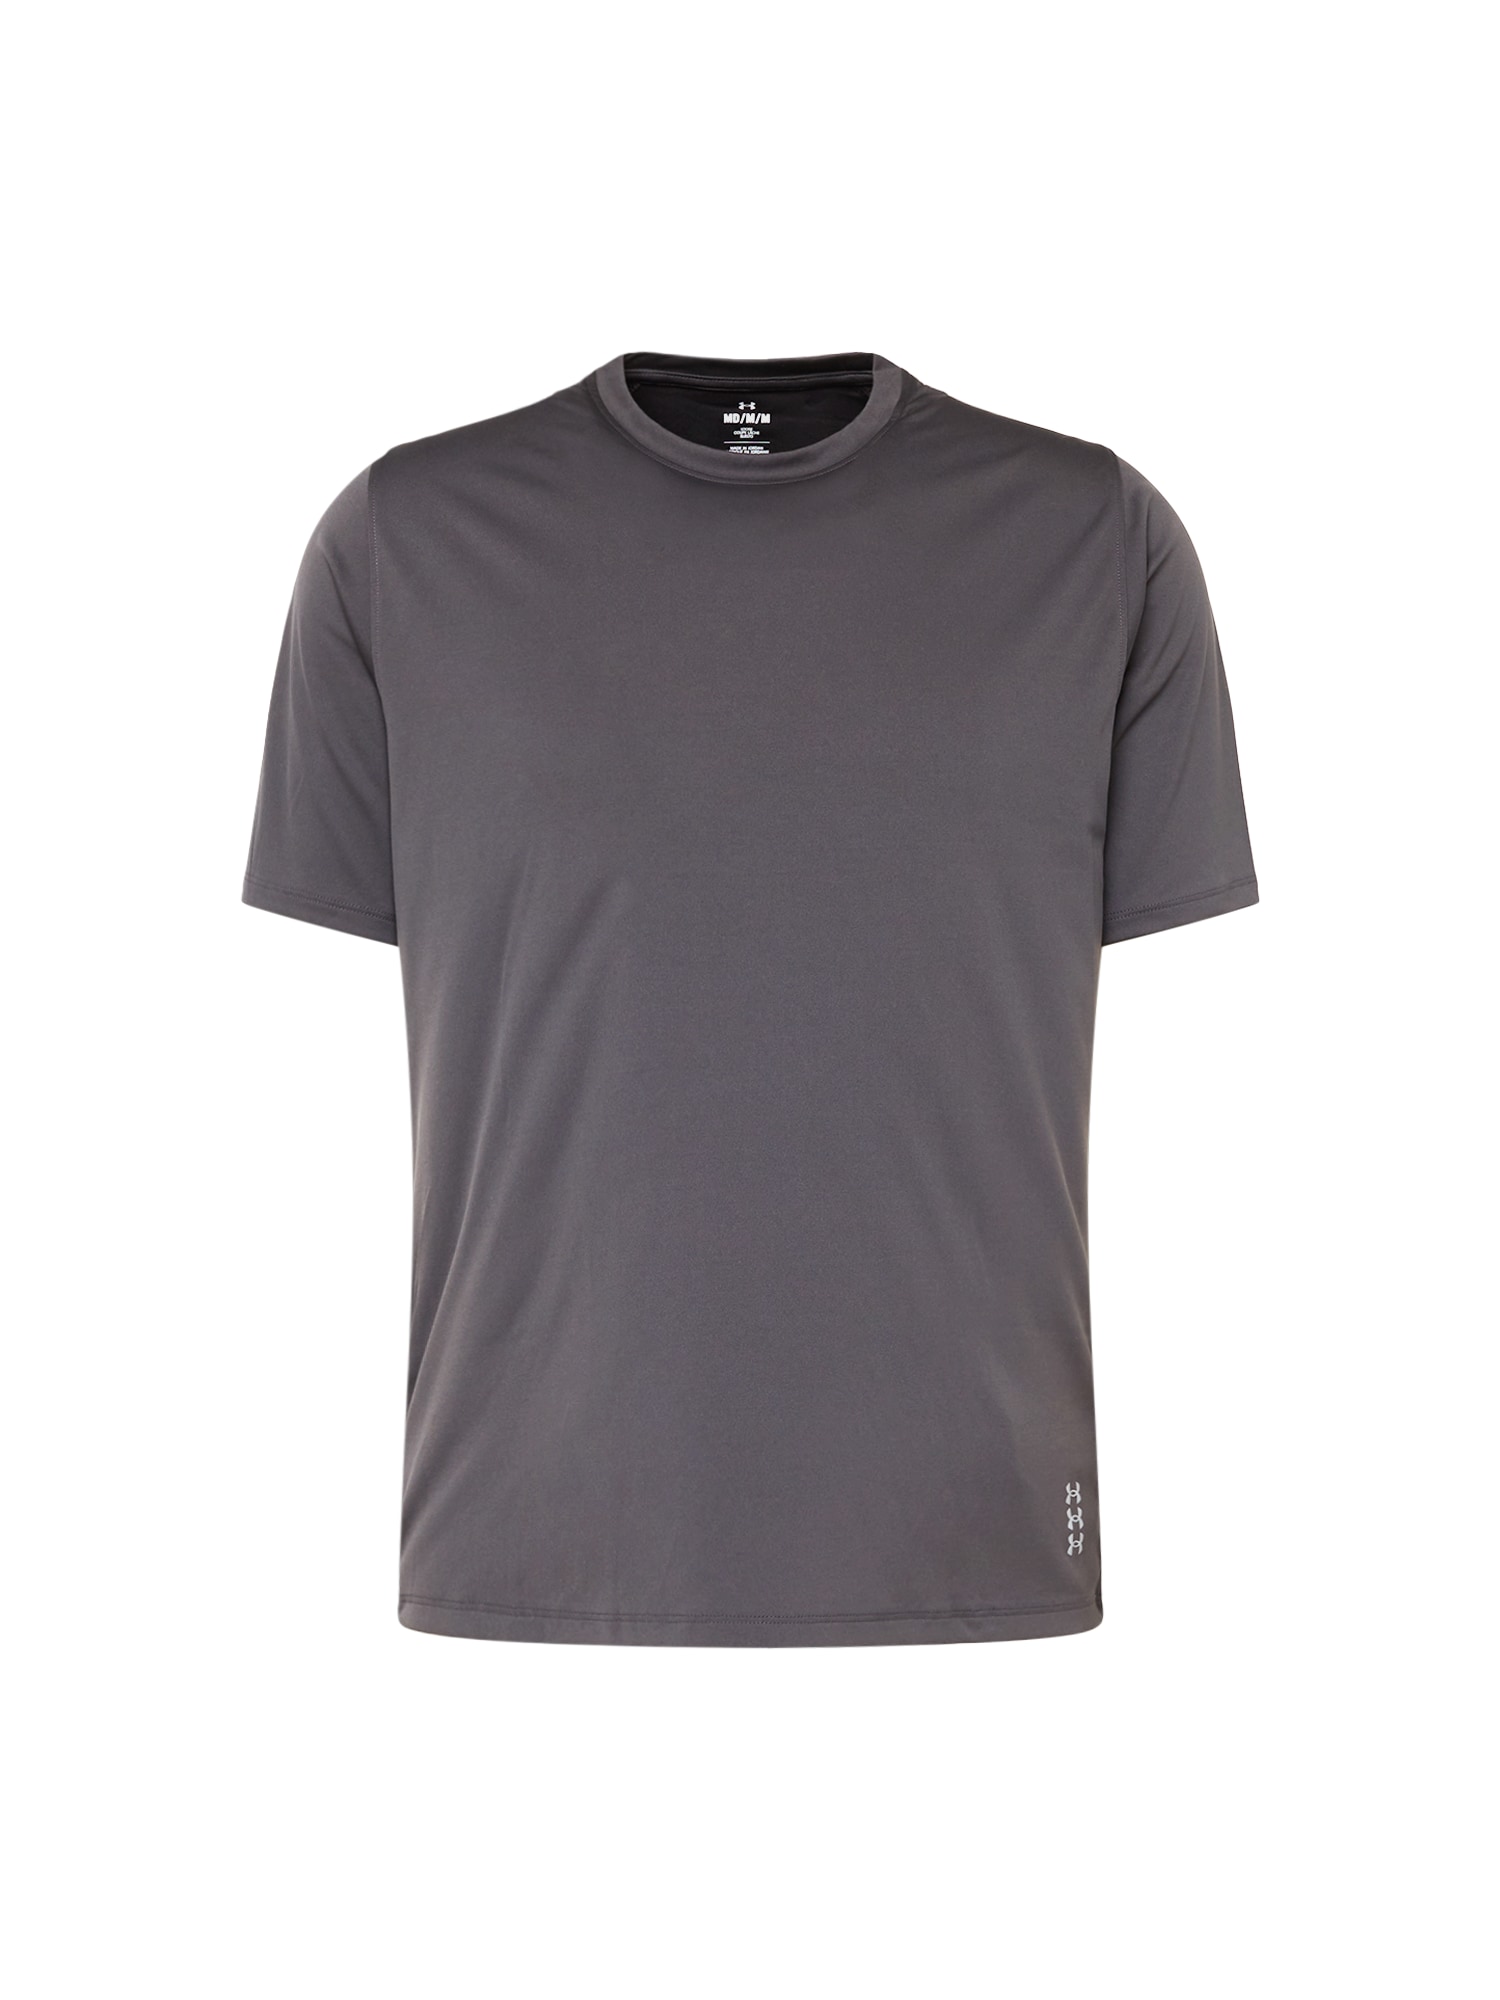 UNDER ARMOUR Funkcionalna majica 'Terrain'  bazaltno siva / bela